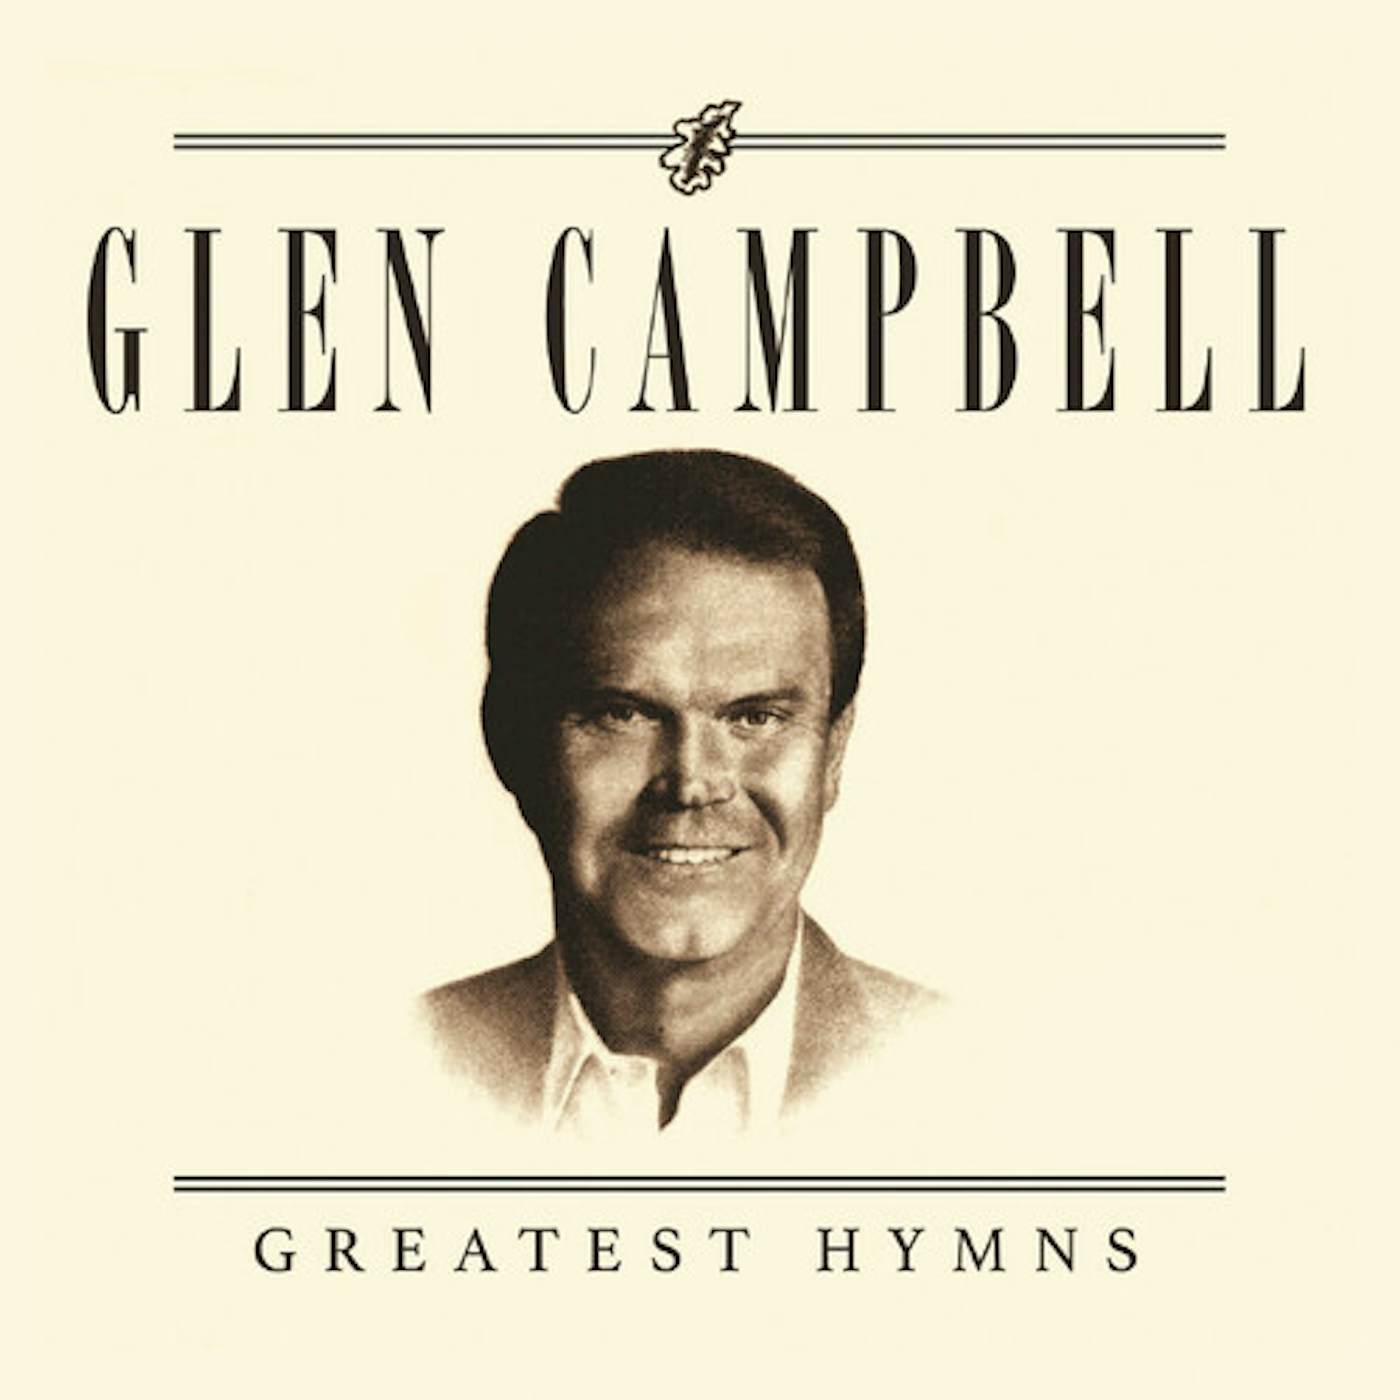 Glen Campbell GREATEST HYMNS CD